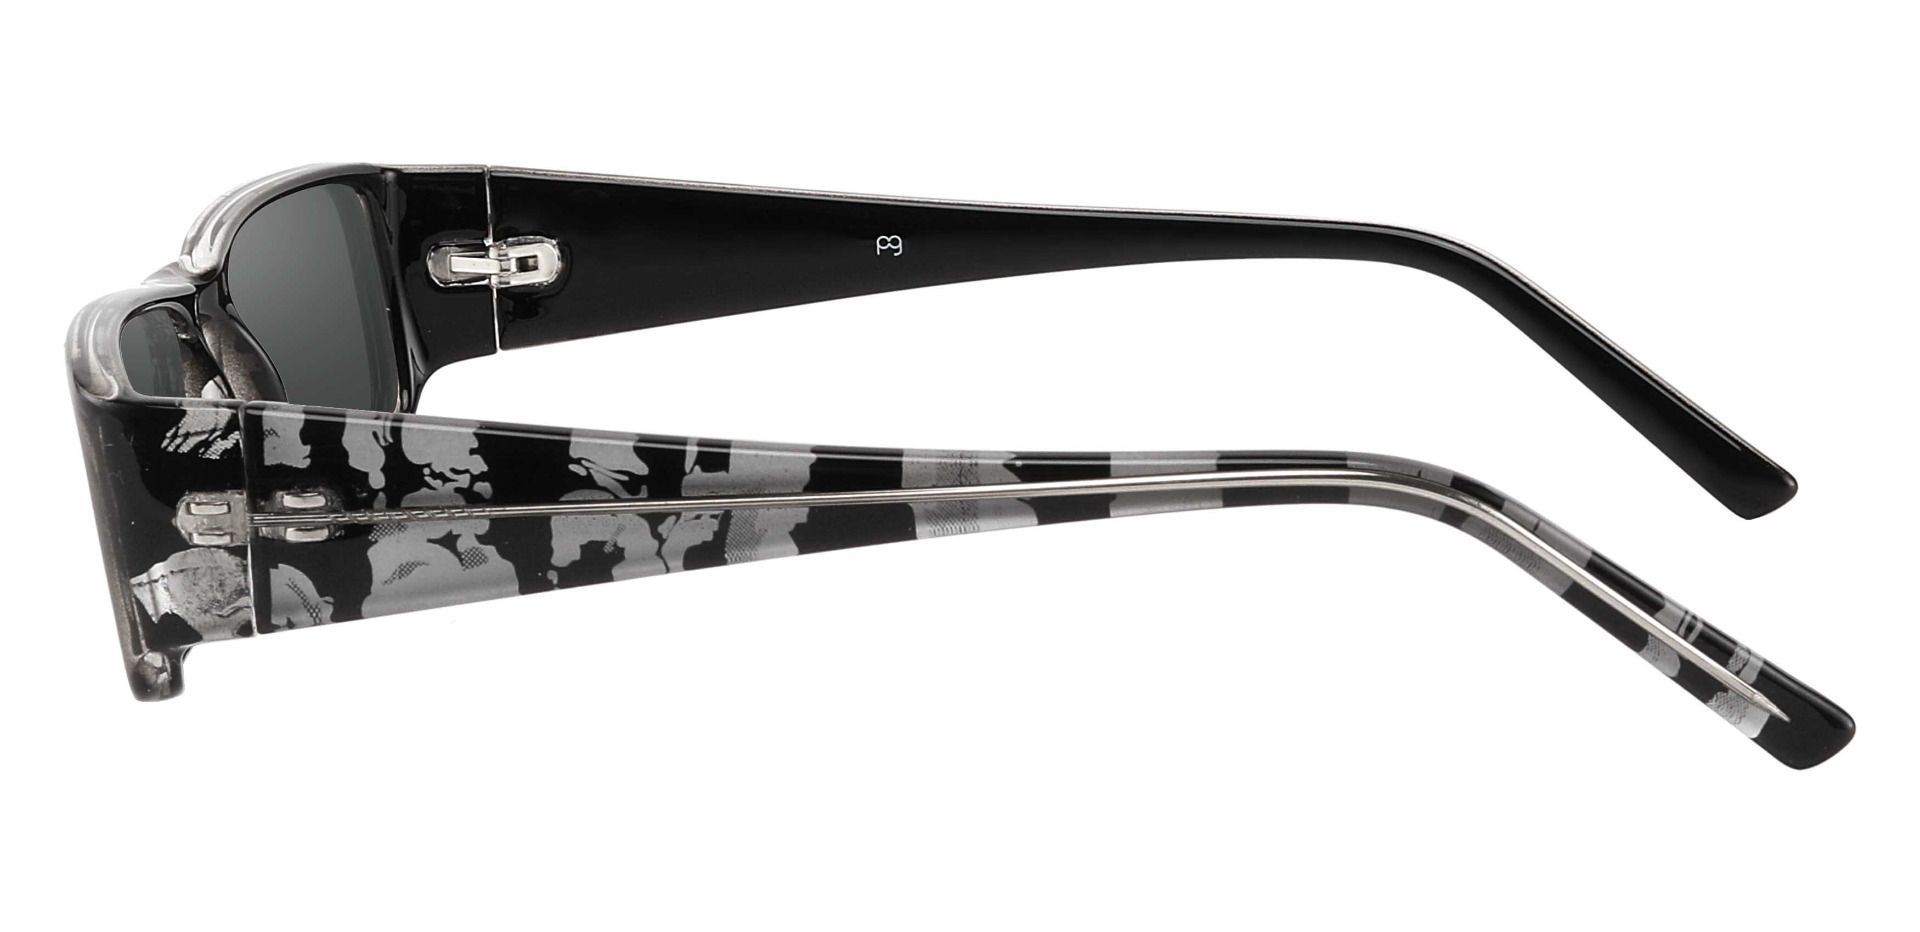 Elbert Rectangle Reading Sunglasses - Black Frame With Gray Lenses